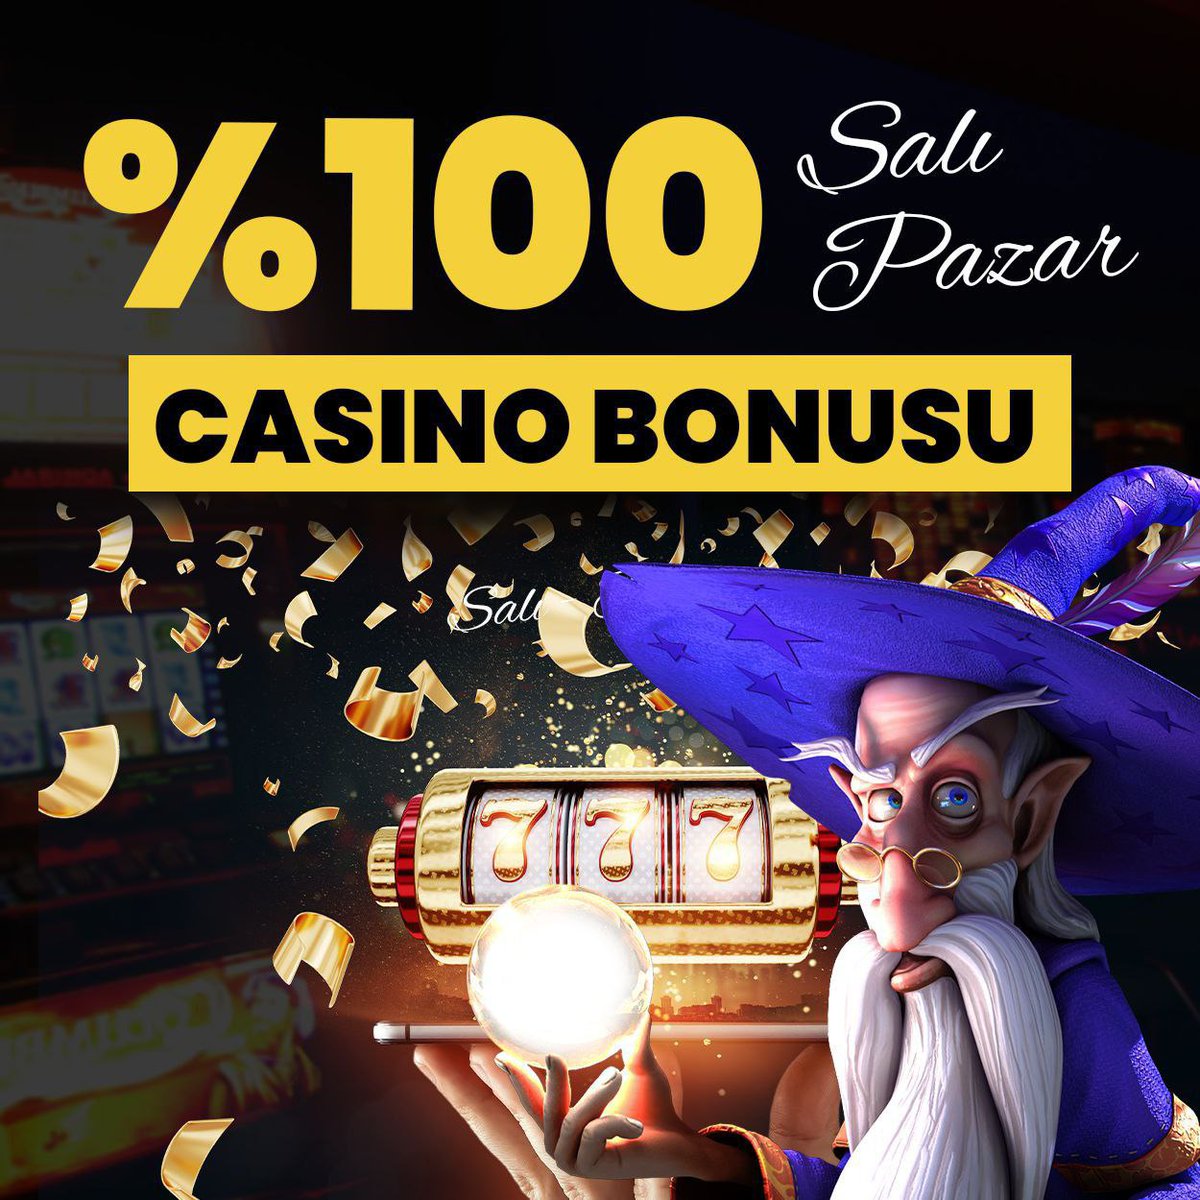 888 online casino login